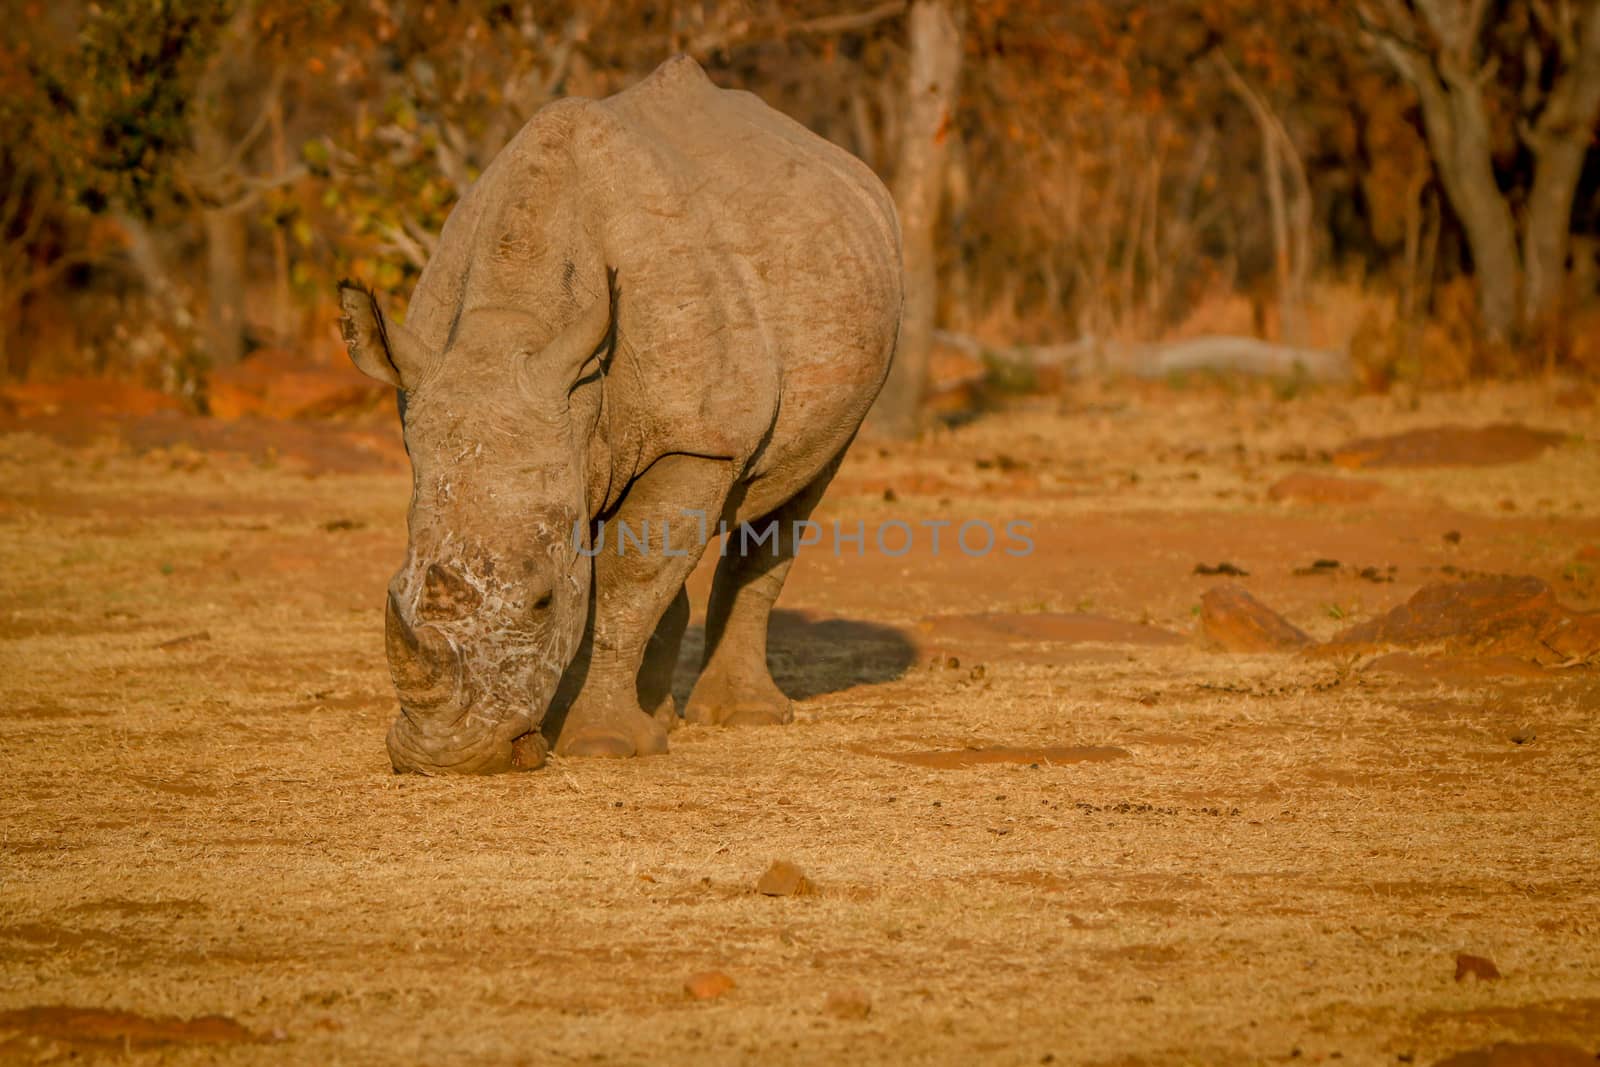 White rhino grazing in the golden light. by Simoneemanphotography